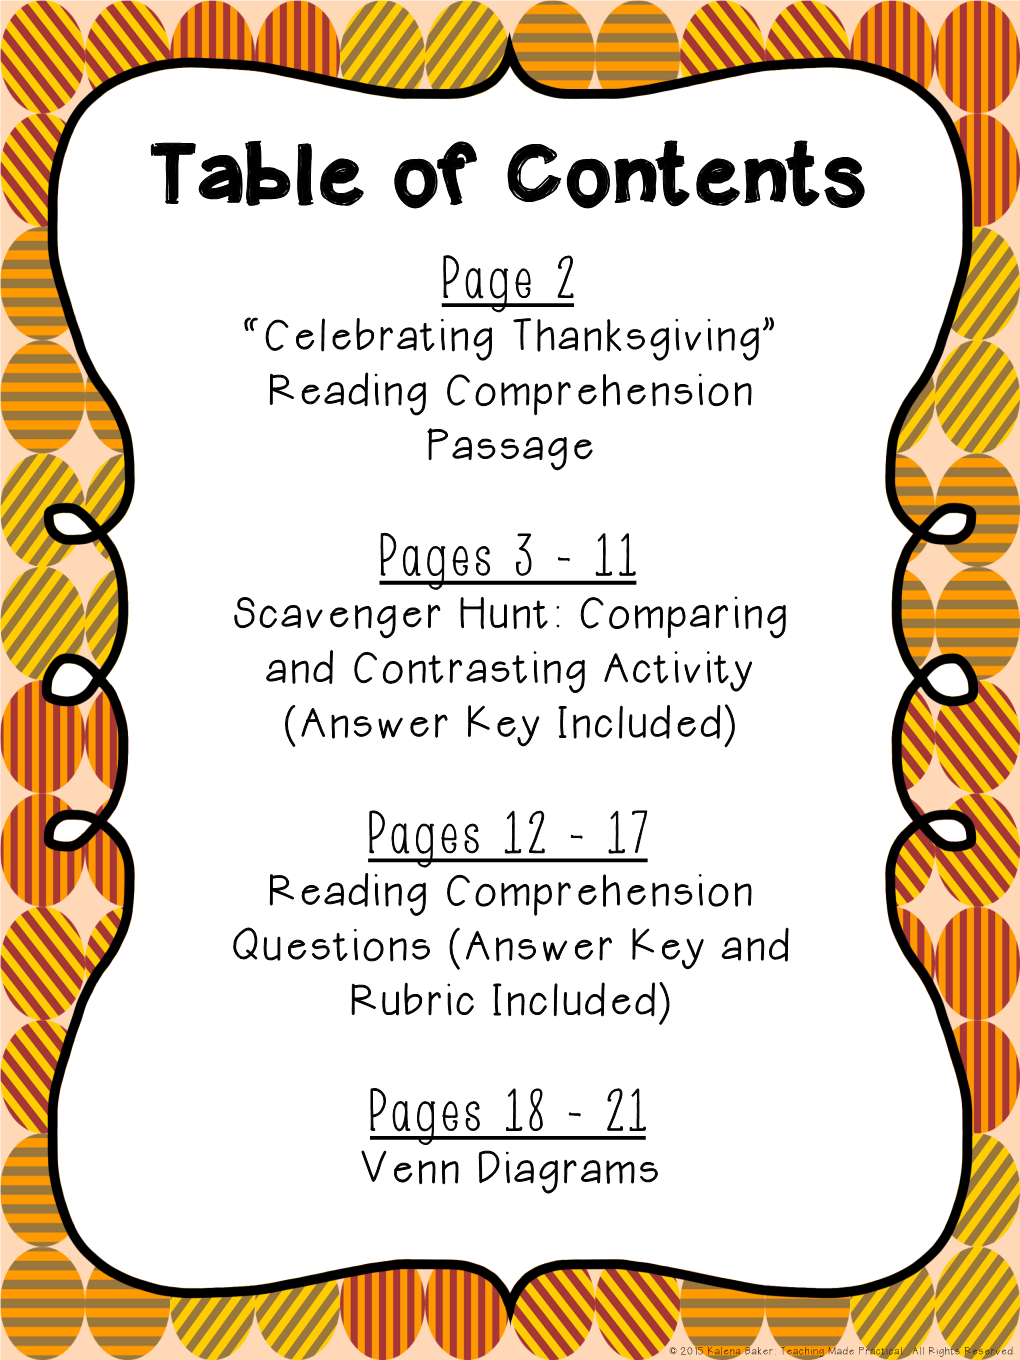 Celebrating Thanksgiving” Reading Comprehension Passage